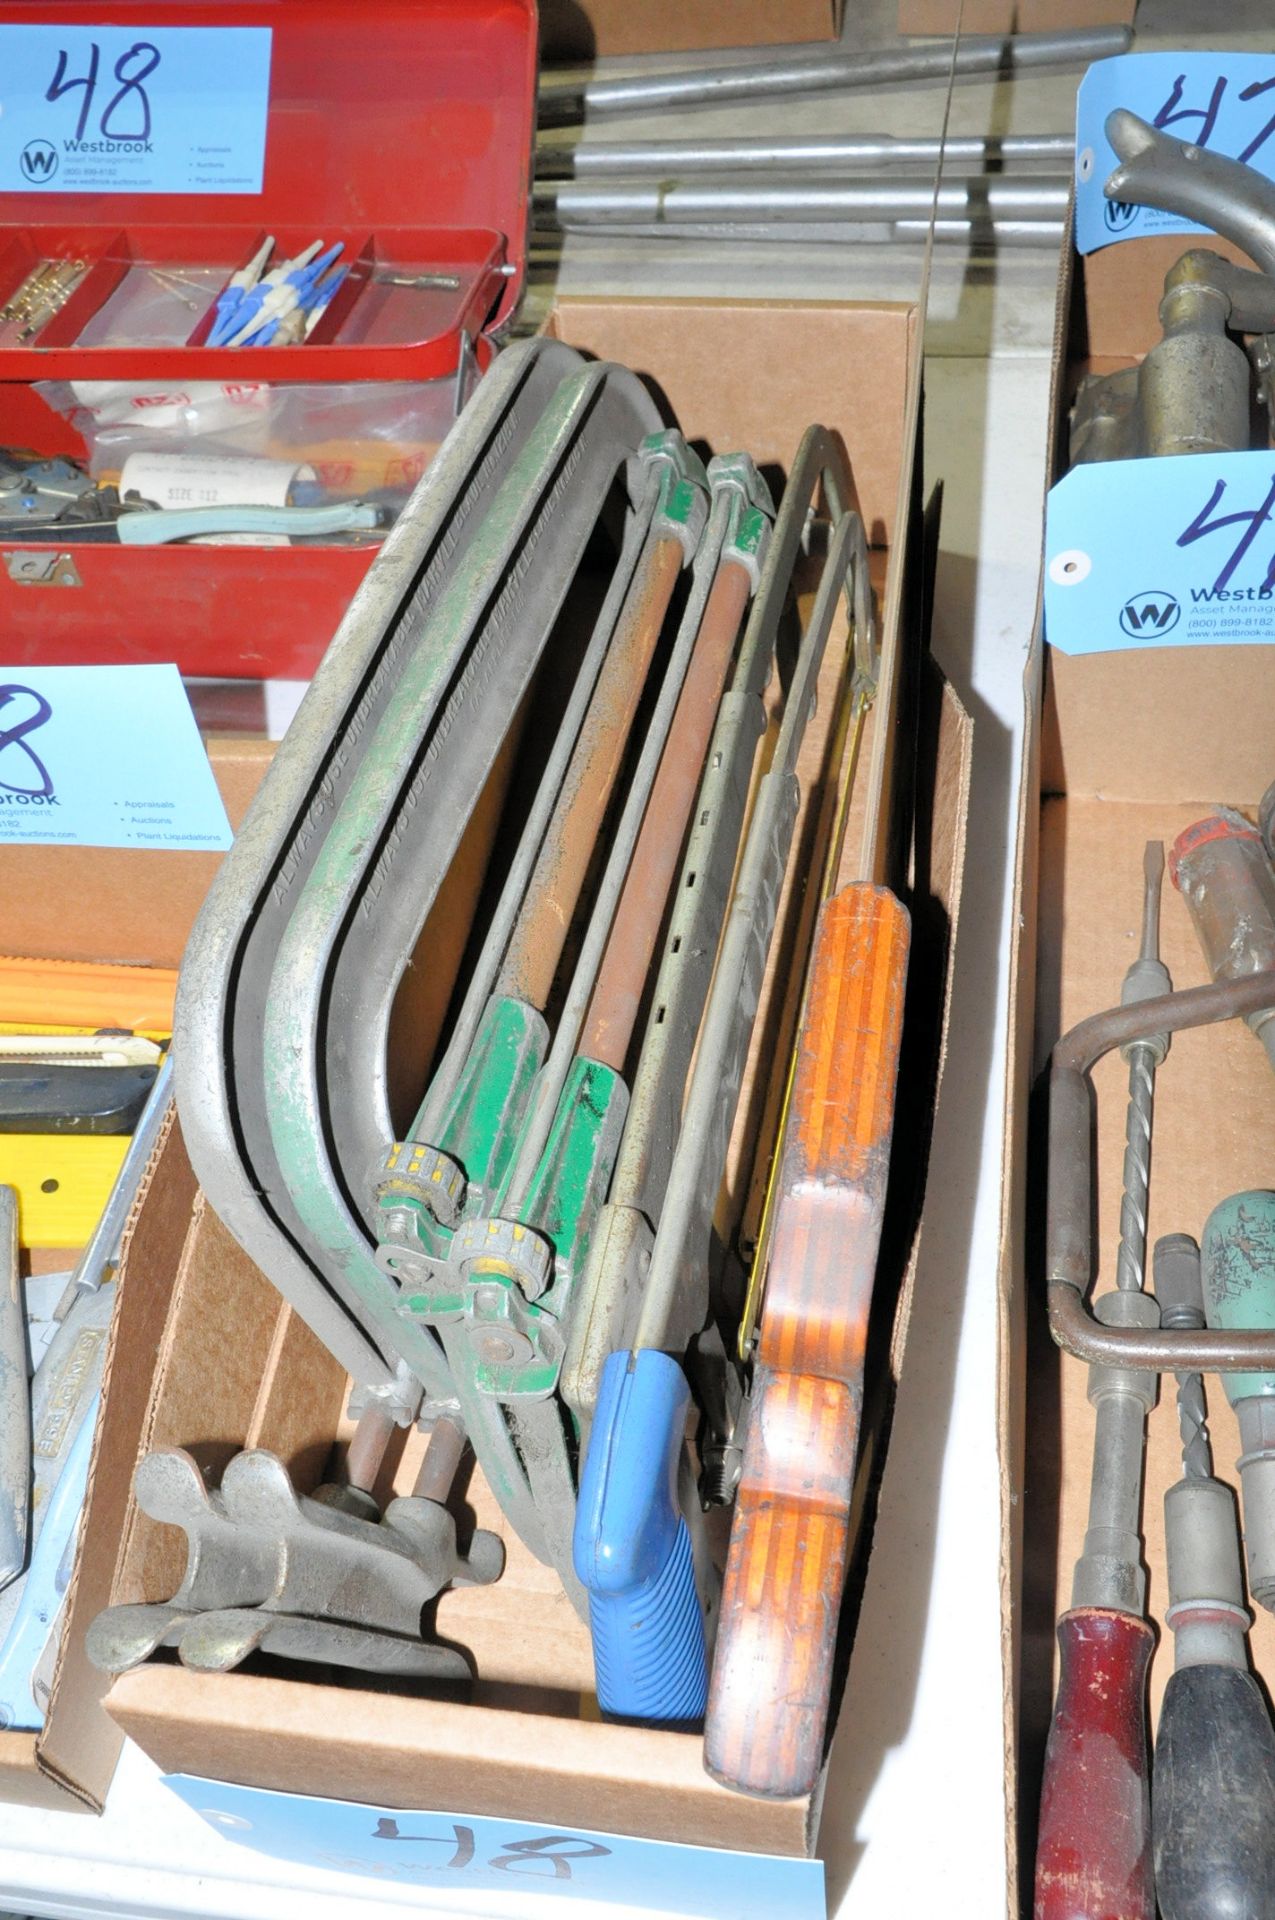 Lot-Hack Saws, Wood Saw, Knives and (2) Service Kits - Image 3 of 4